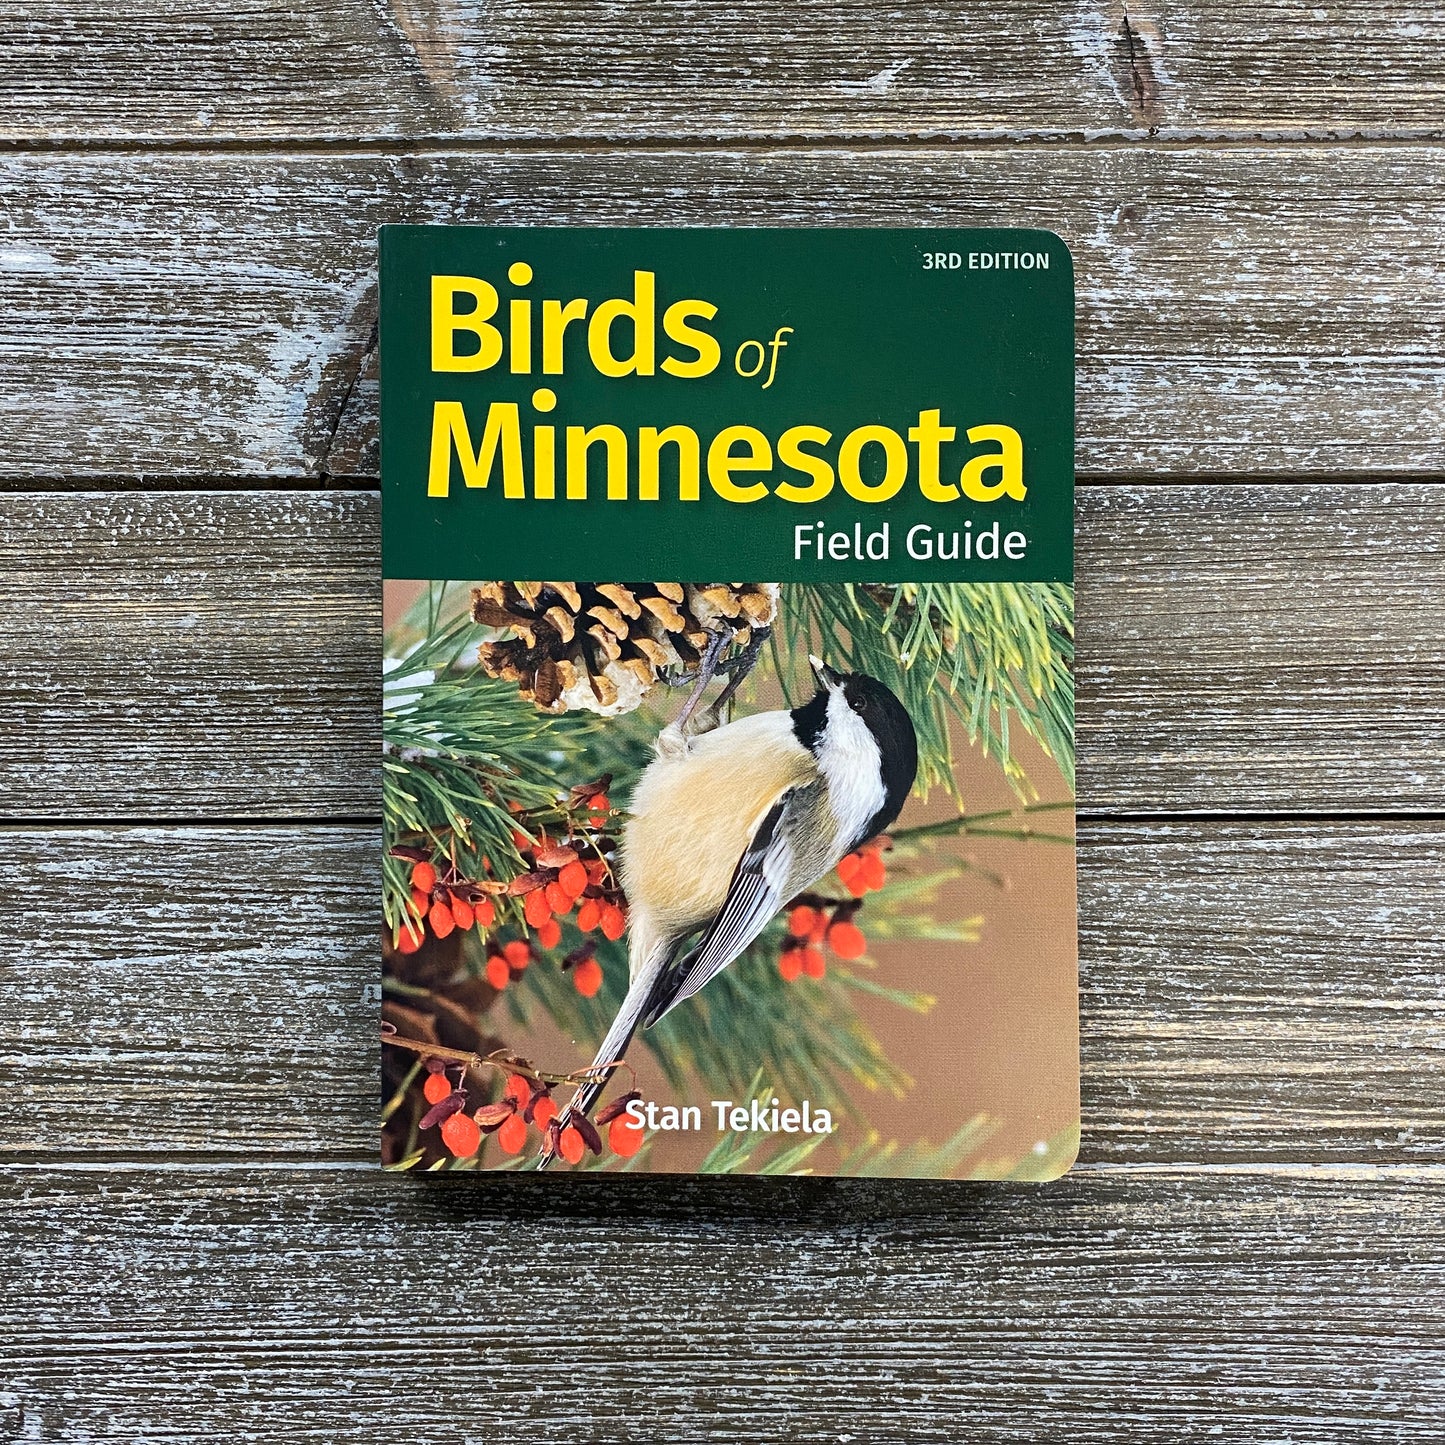 Book - Birds of Minnesota Field Guide 3rd Edition